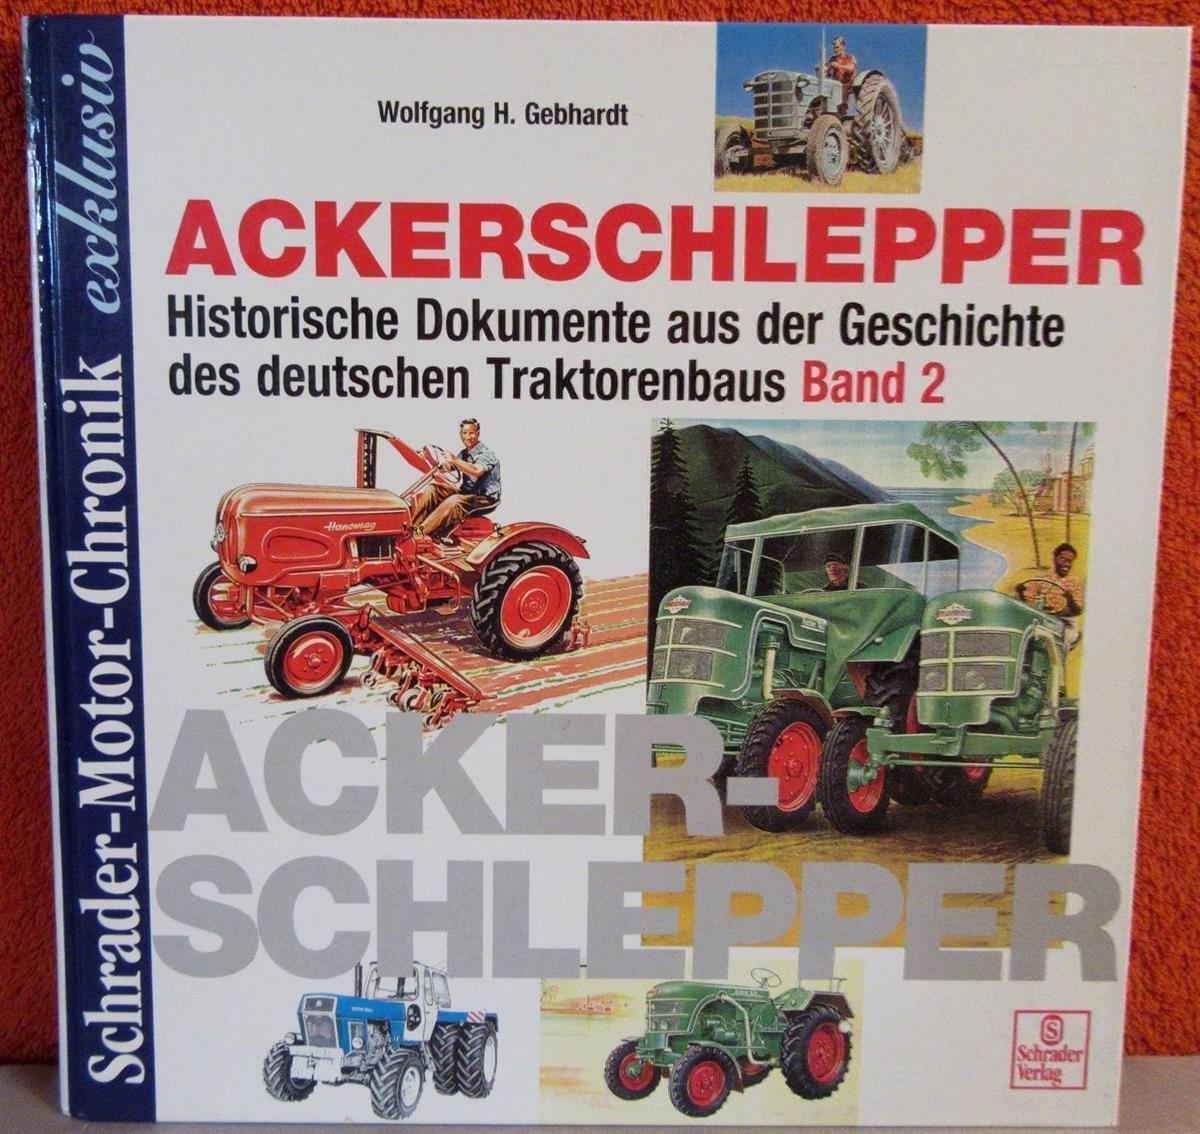 ackerschlepper-traktoren-band-2.jpg